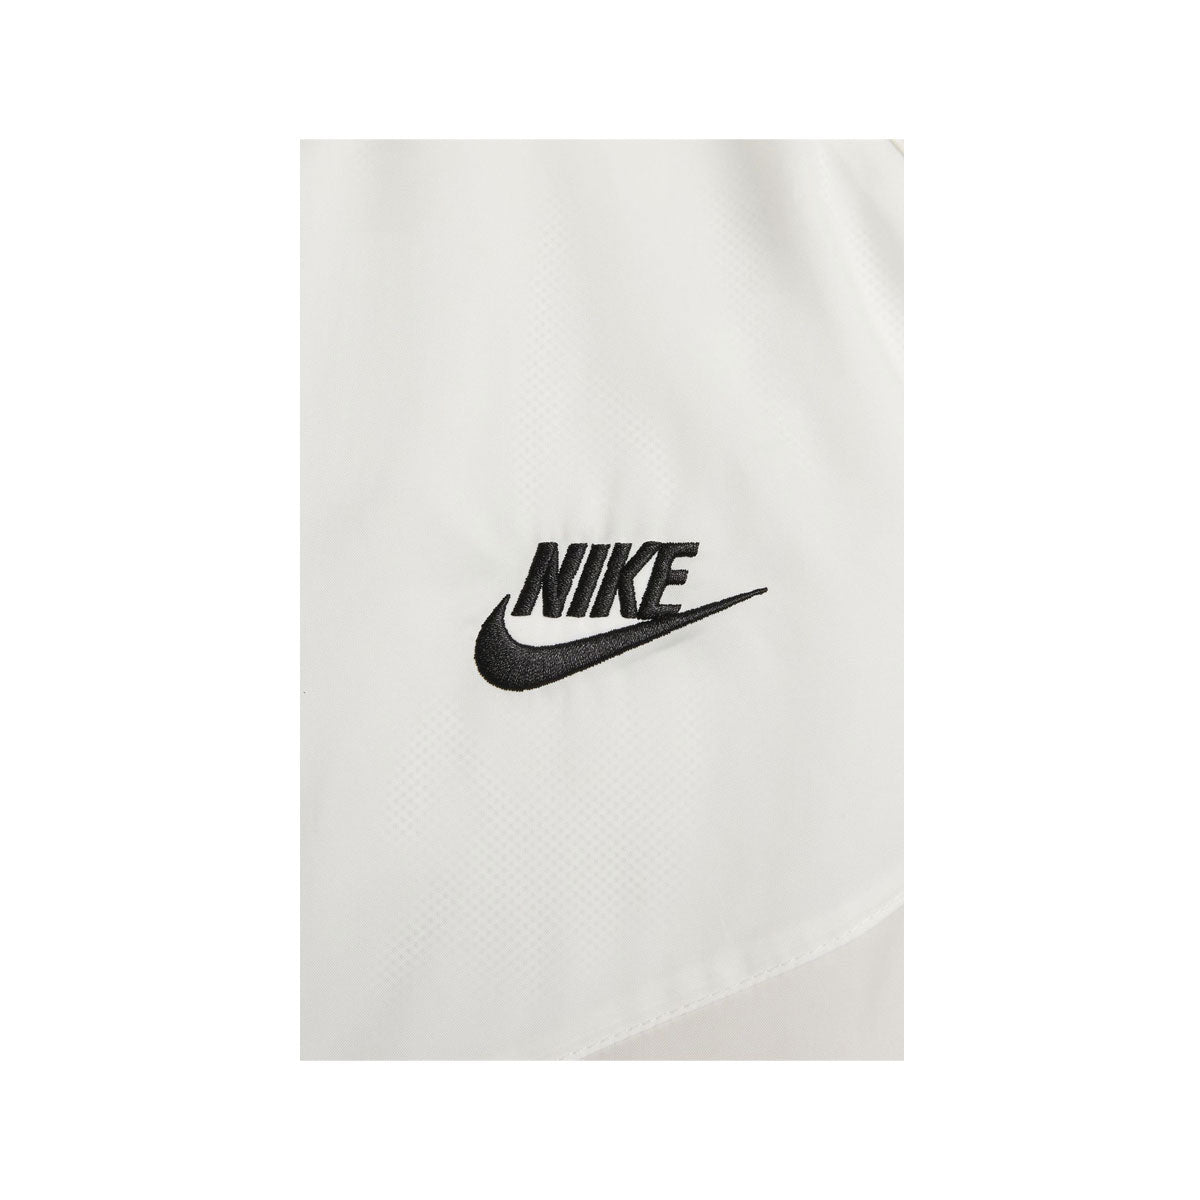 Nike Men's Sportswear Windrunner Full Zip Hooded Jacket